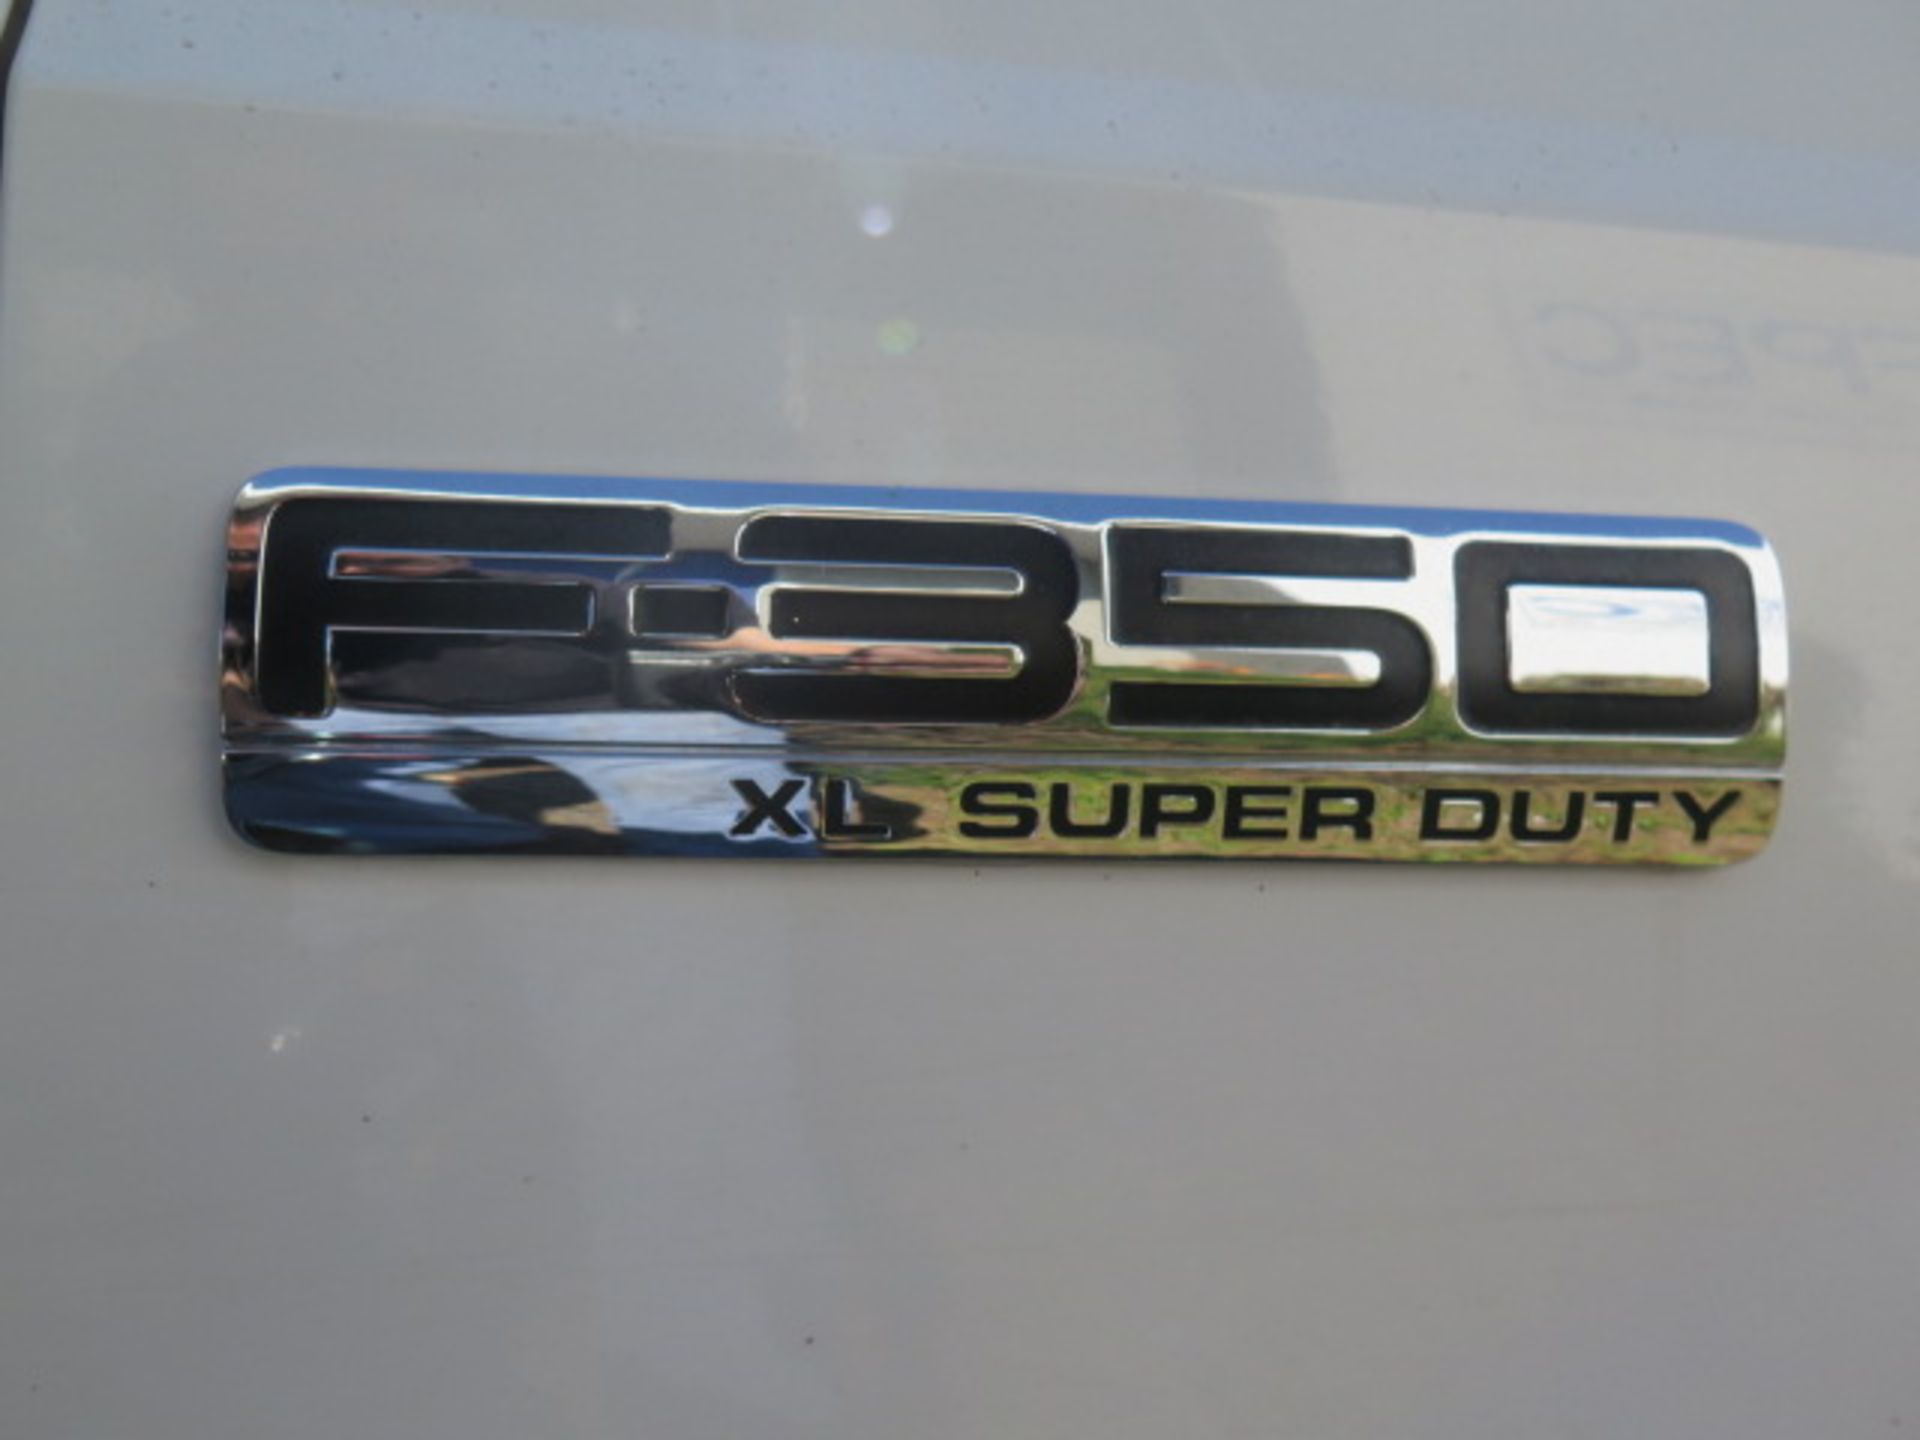 2009 Ford F-350 XL Super Duty Service Truck Lisc# 8F21396 w/ Power Stroke Turbo Diesel V8 Engine, - Image 17 of 17